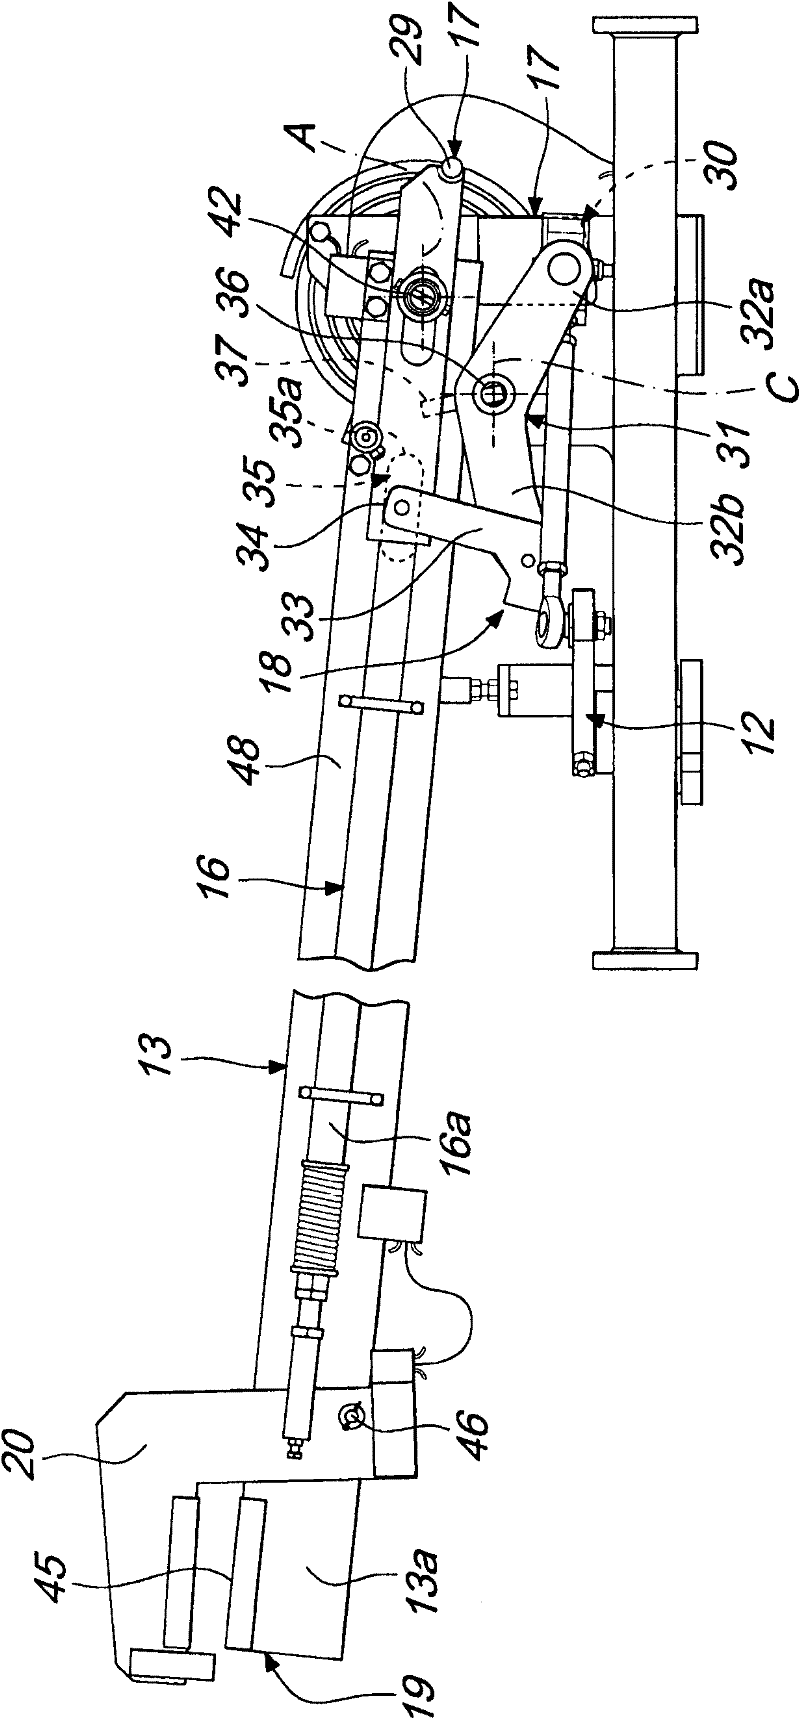 Semi-pantograph disconnector